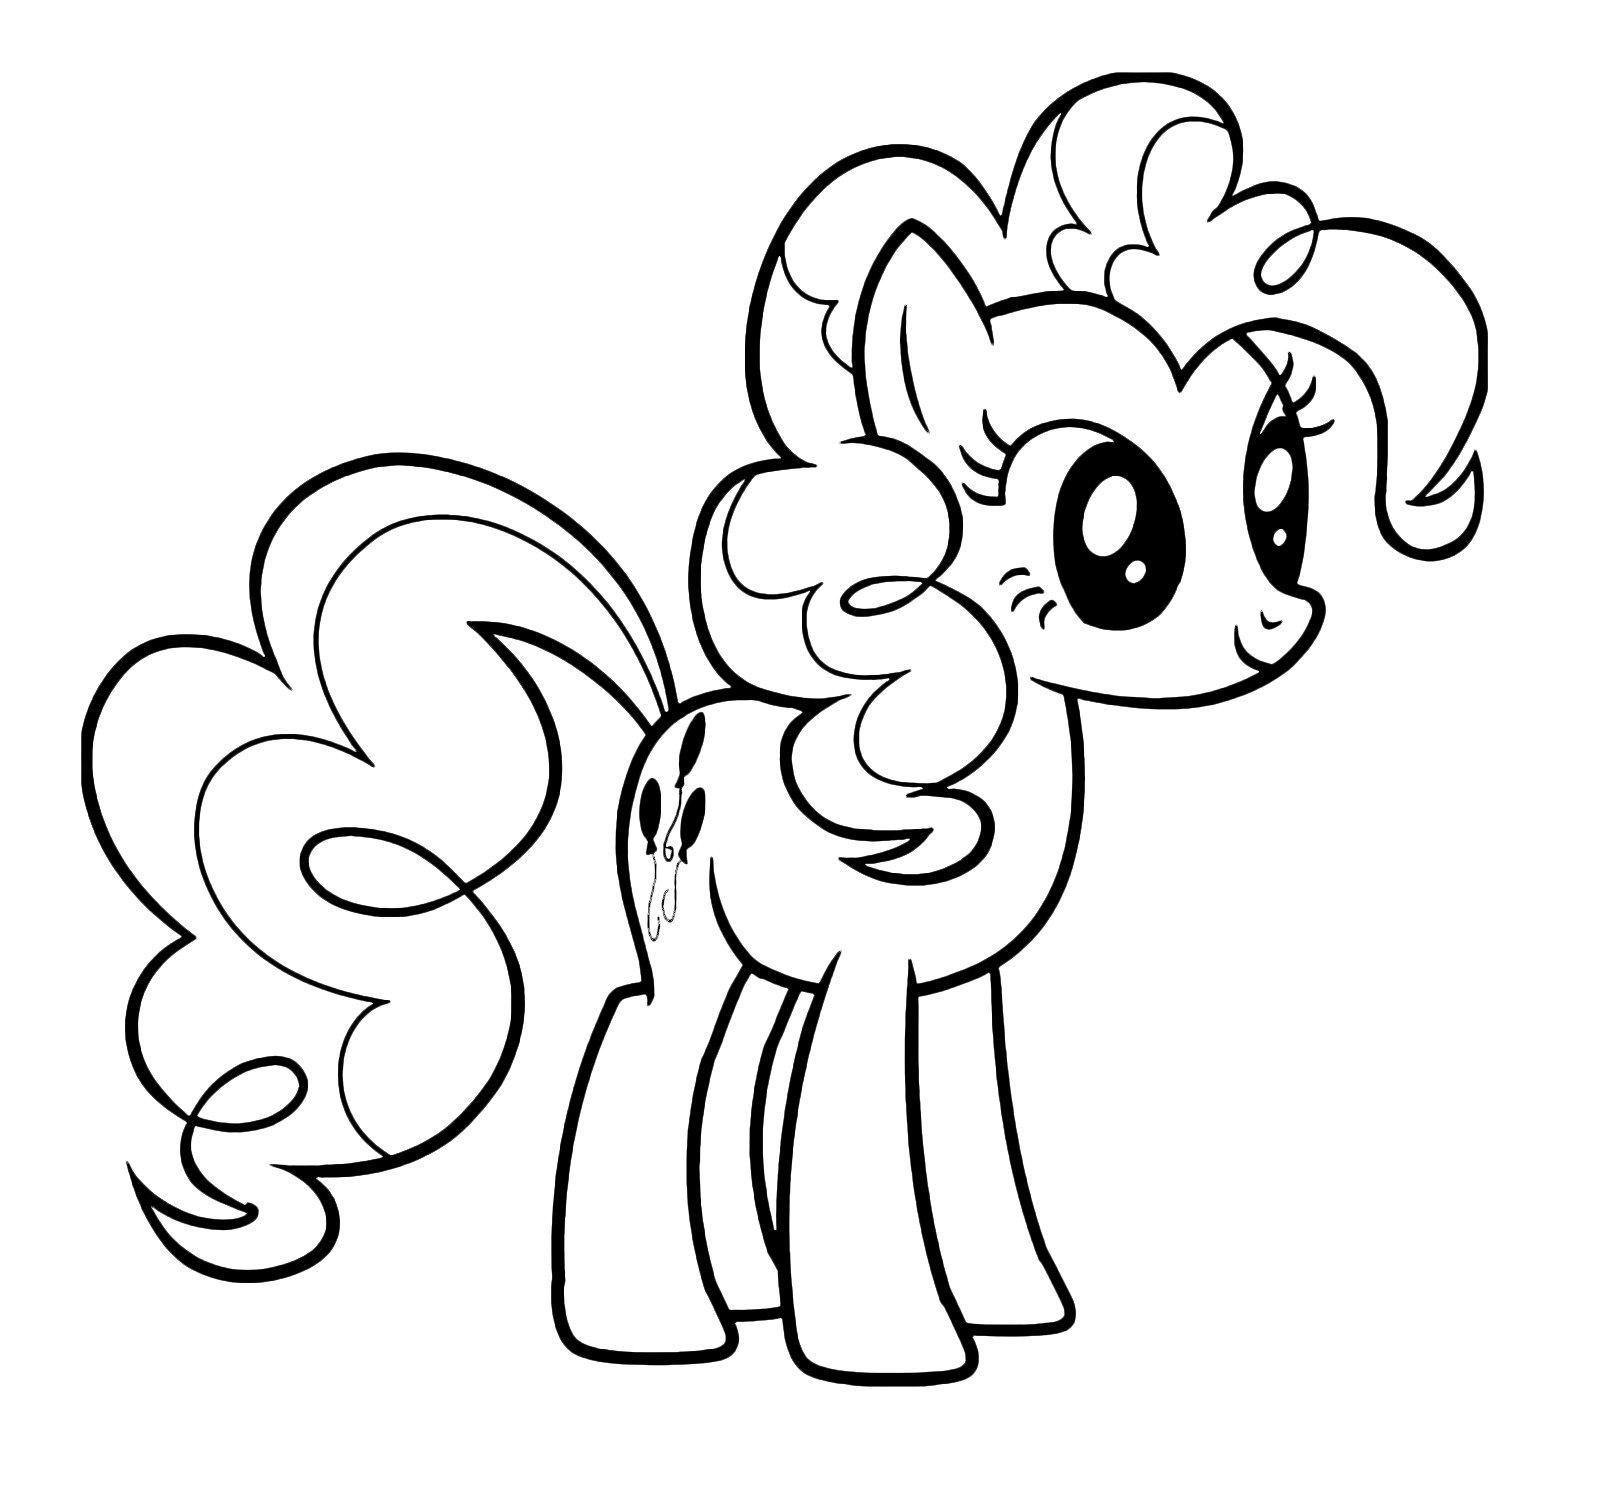 My Little Pony - Pinkie Pie with her messy fuchsia hair